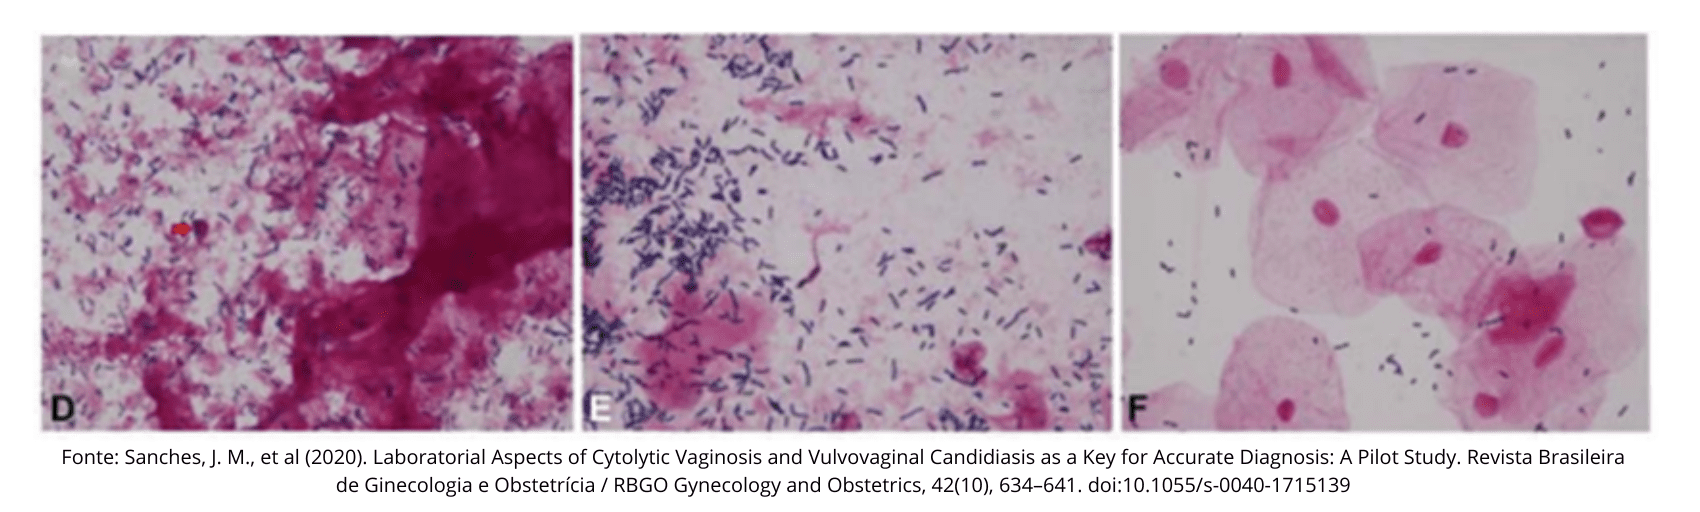 vaginose citolítica